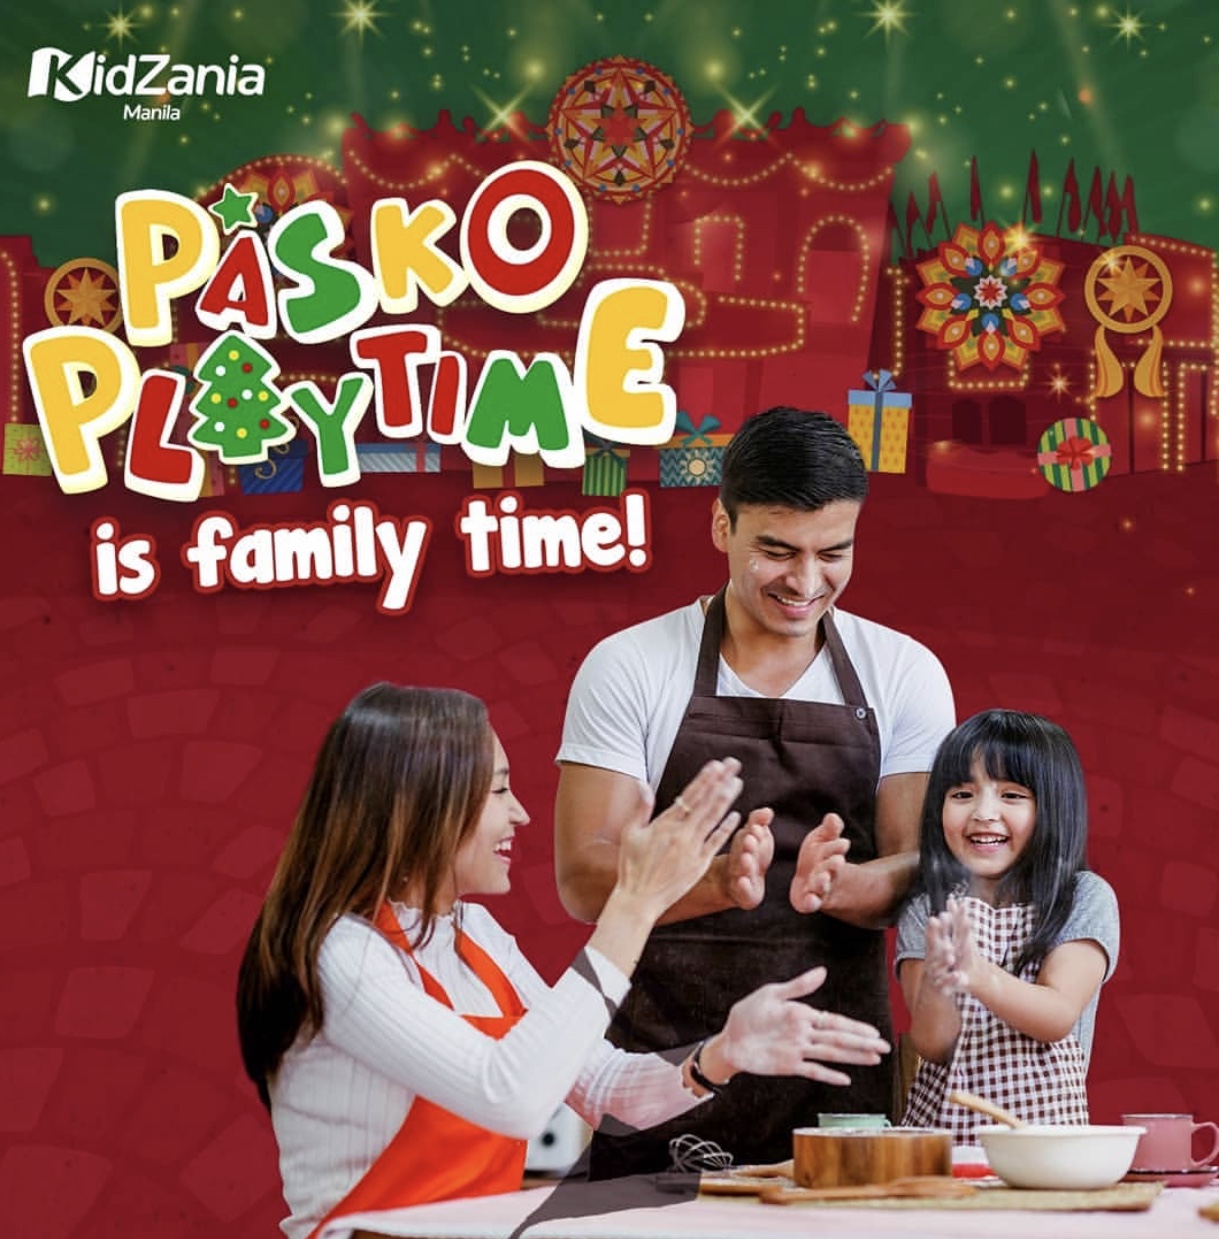 Parents can play with their kids this Christmas season in KidZania Manila's Pasko Playtime.jpg